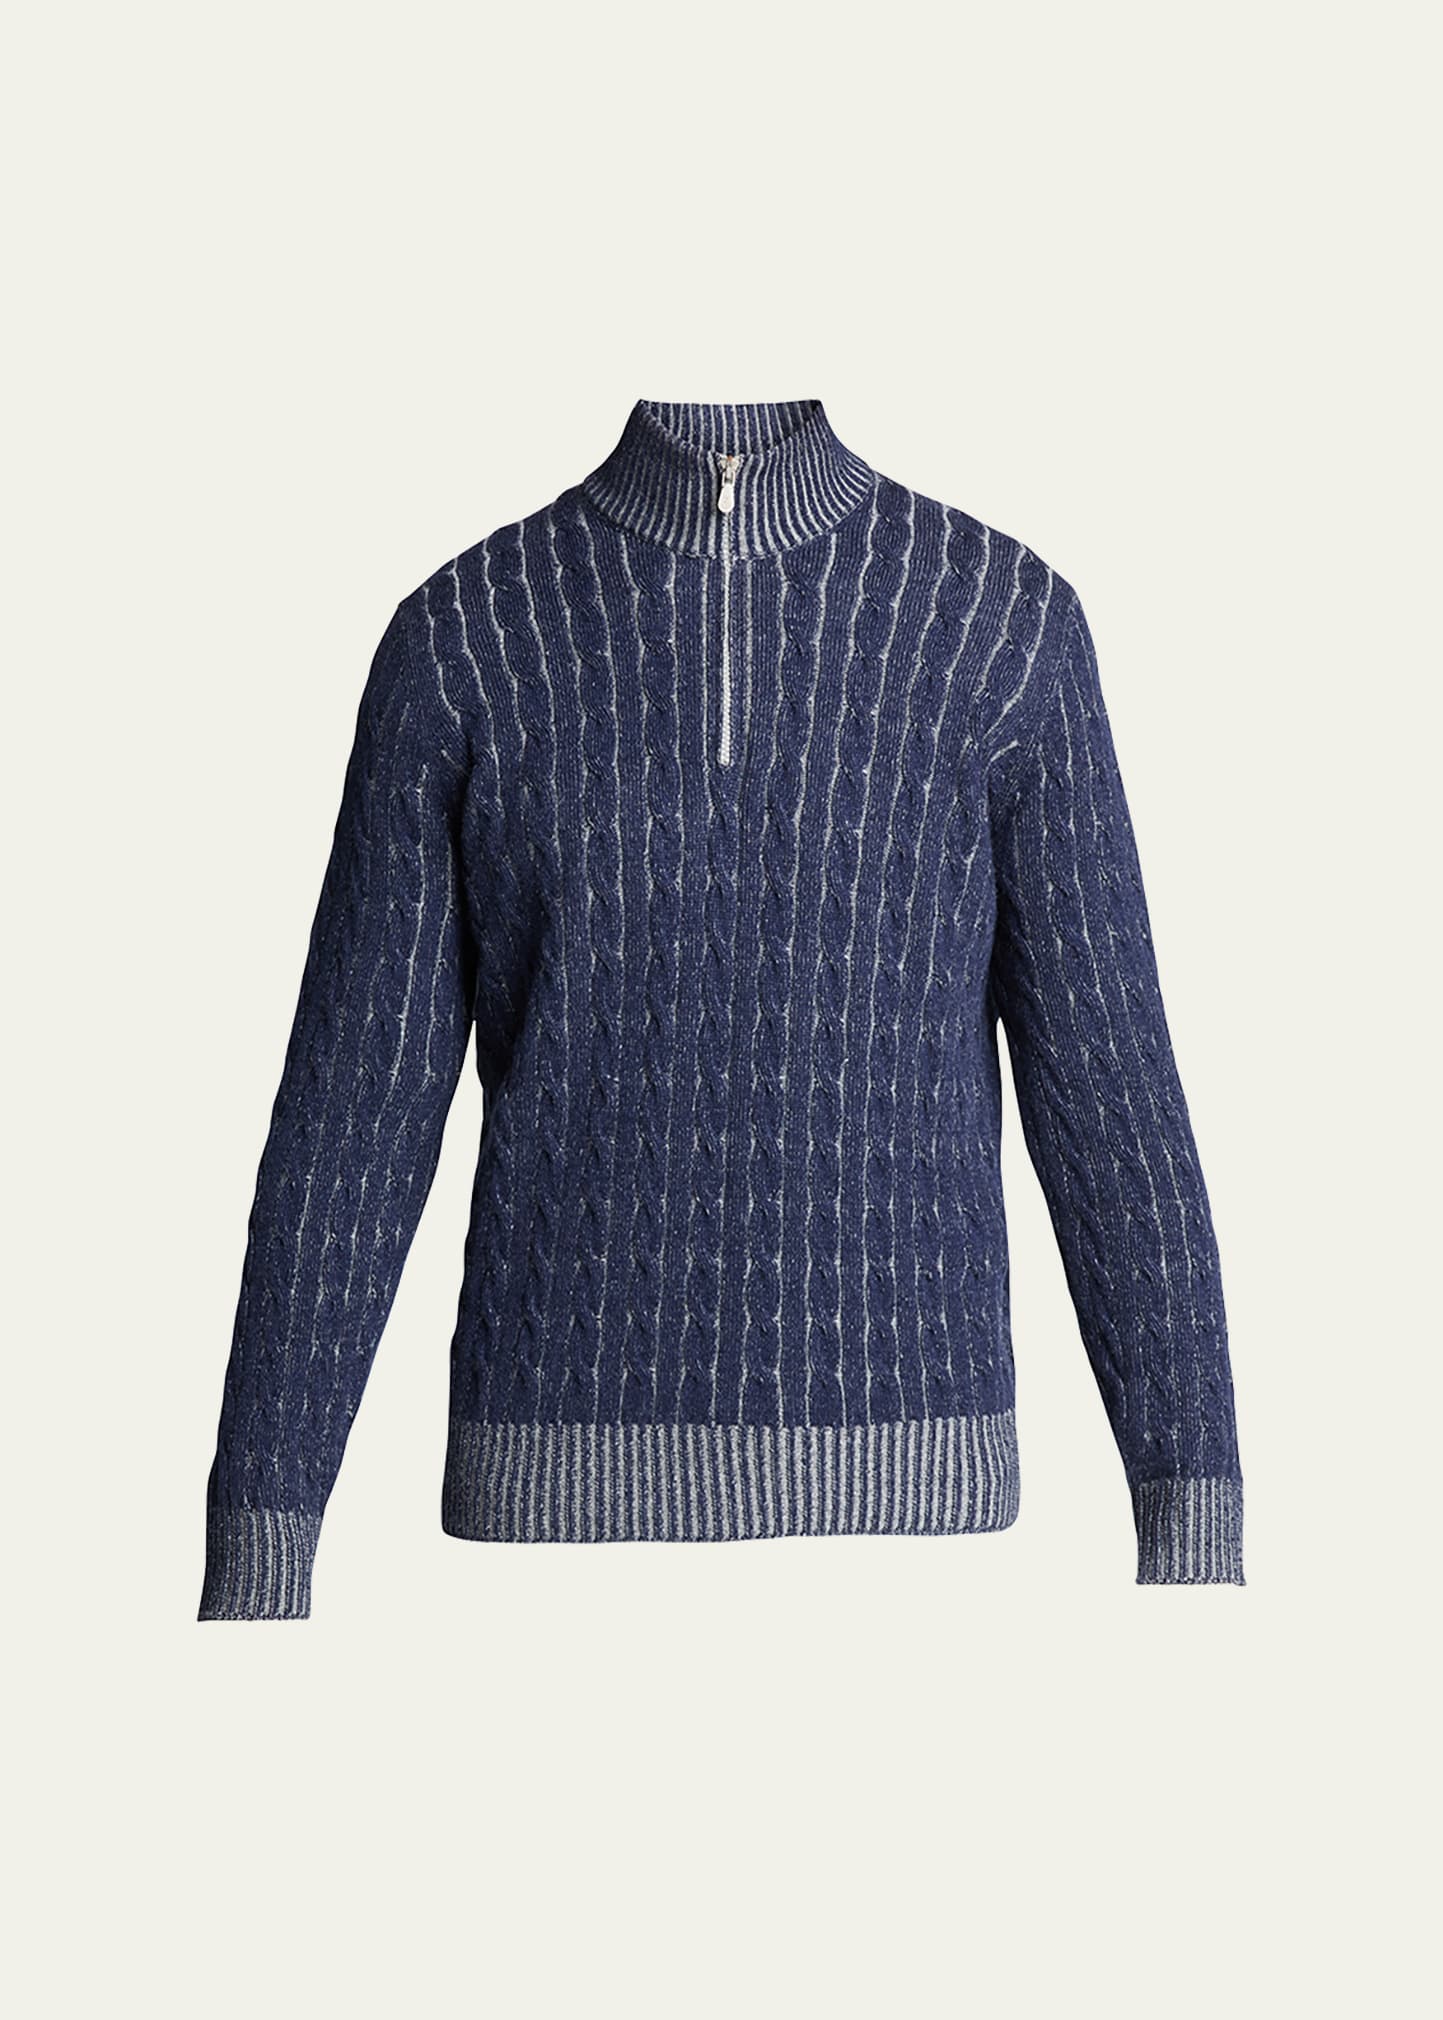 Brunello Cucinelli Men's Cable 1/4-Zip Cashmere Sweater